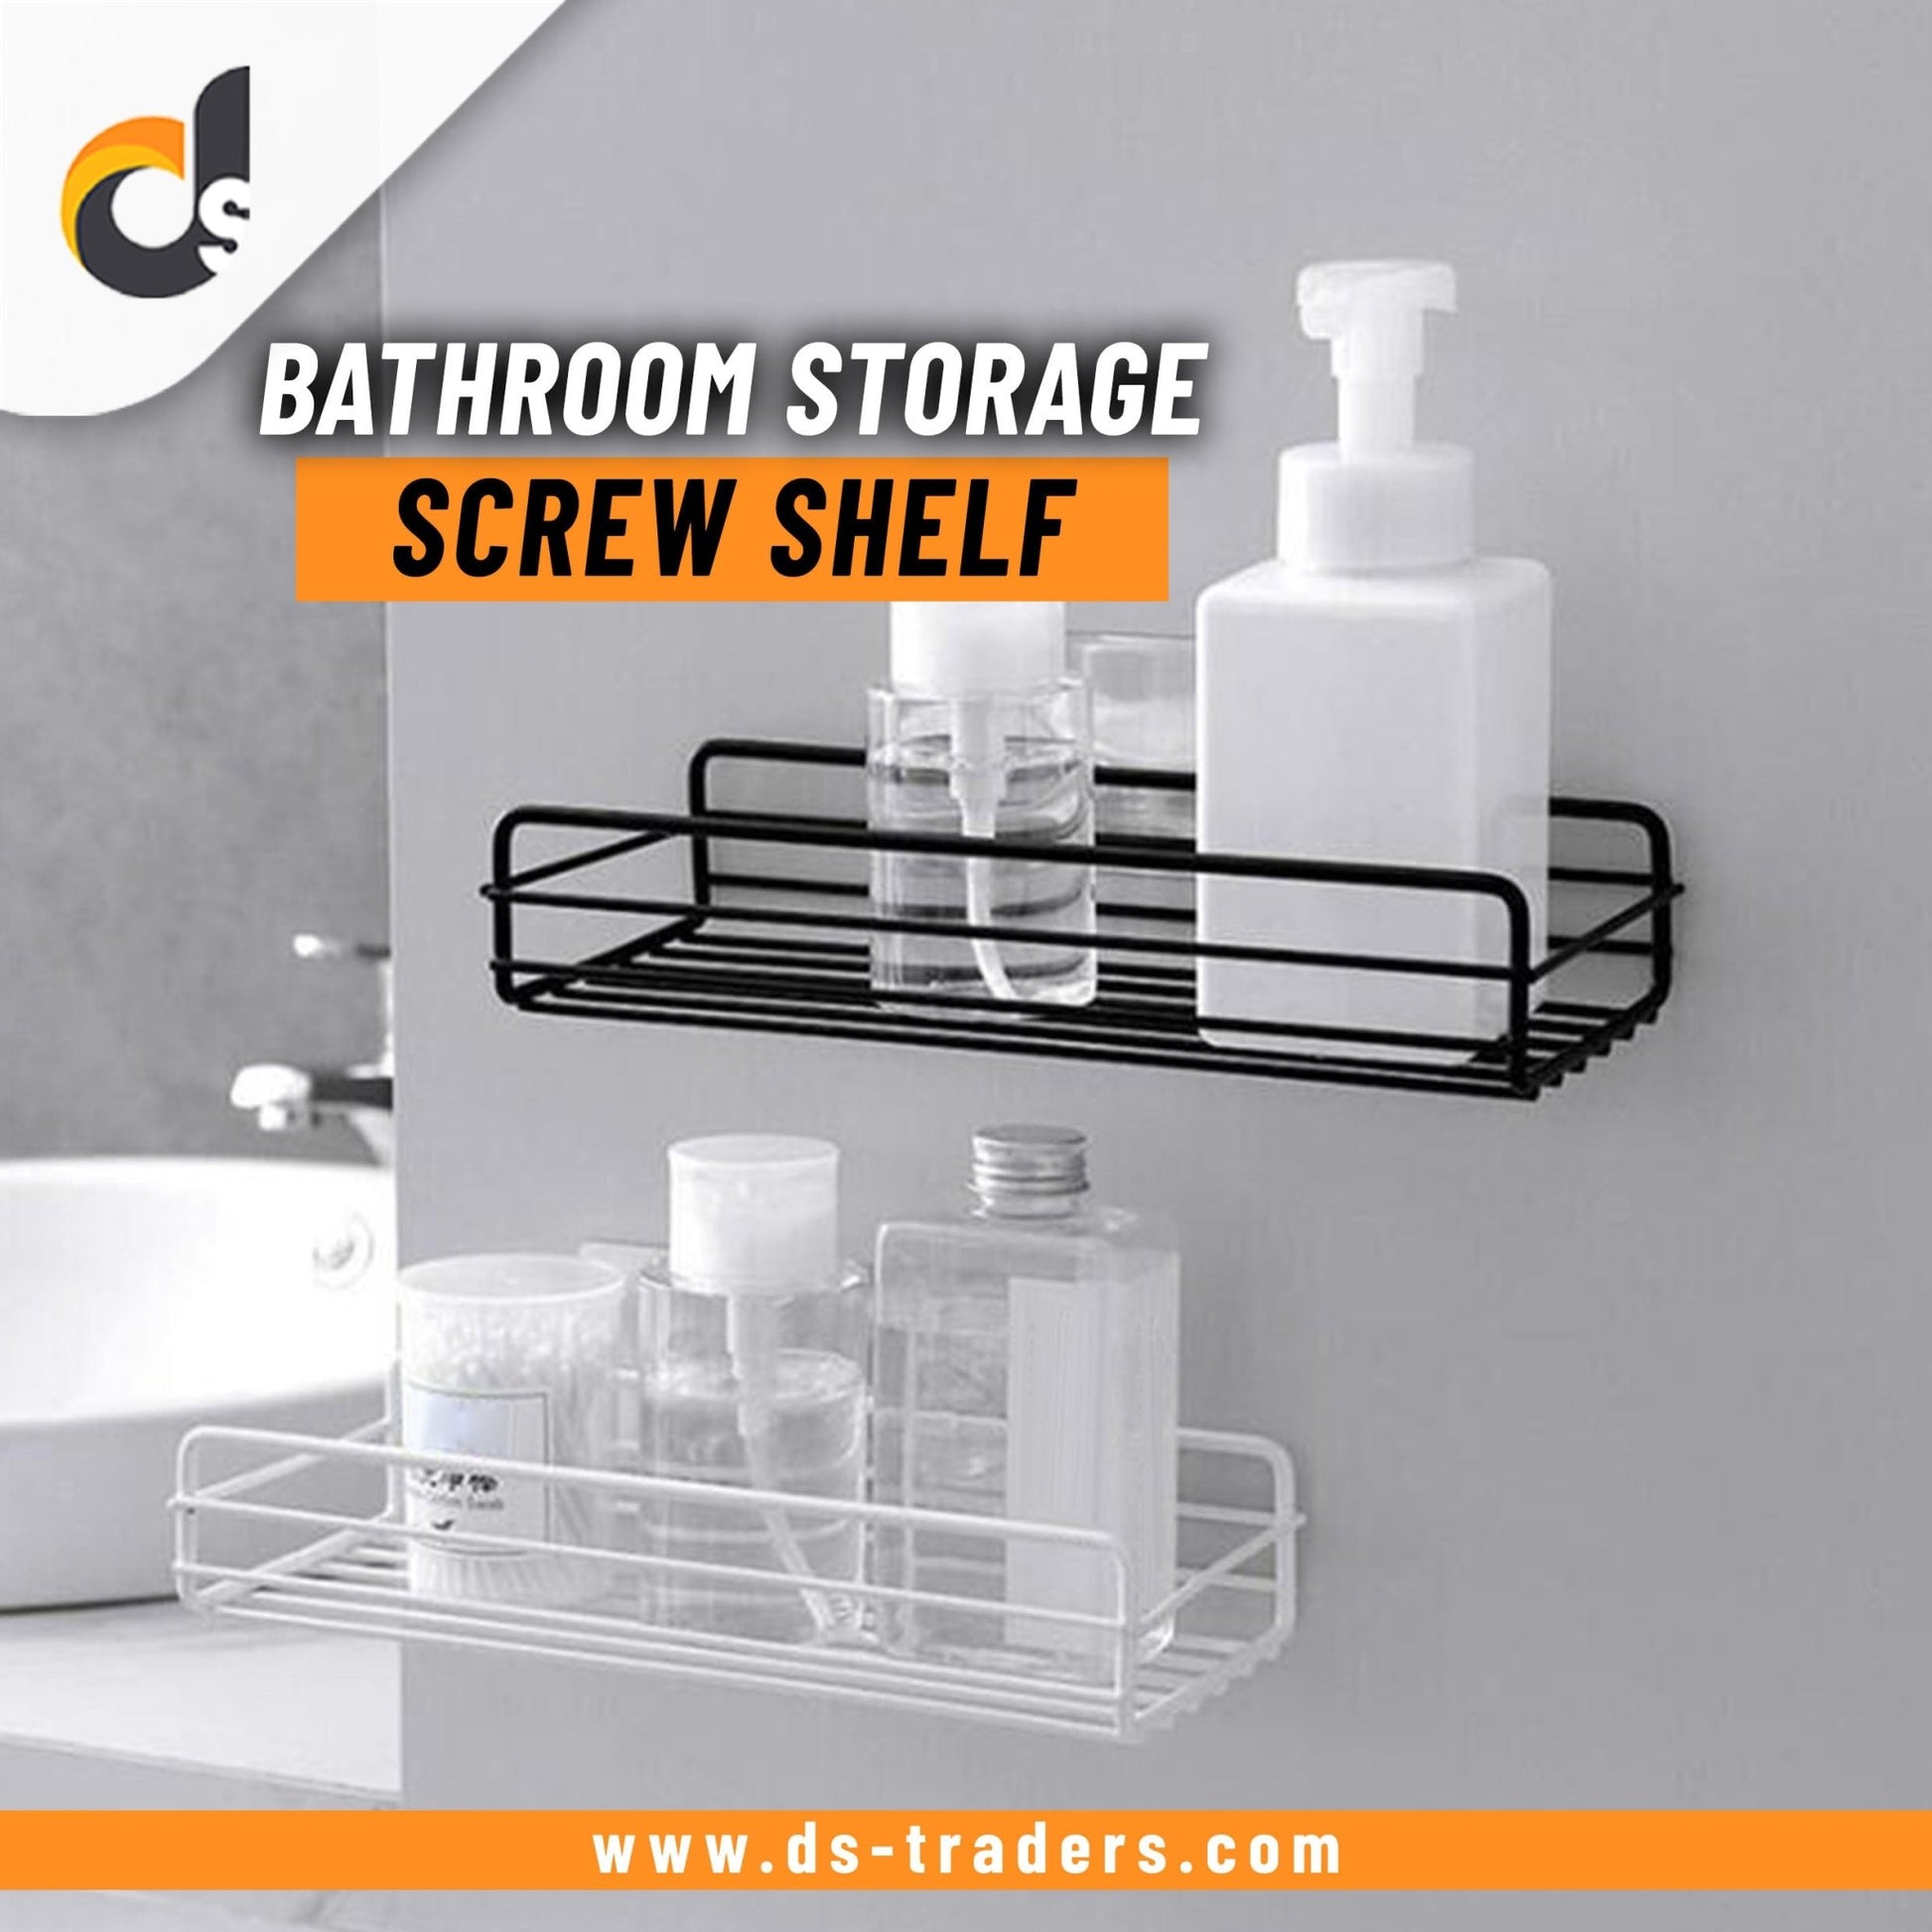 Stainless Steel Bathroom Storage Shelf (Screw) - DS Traders